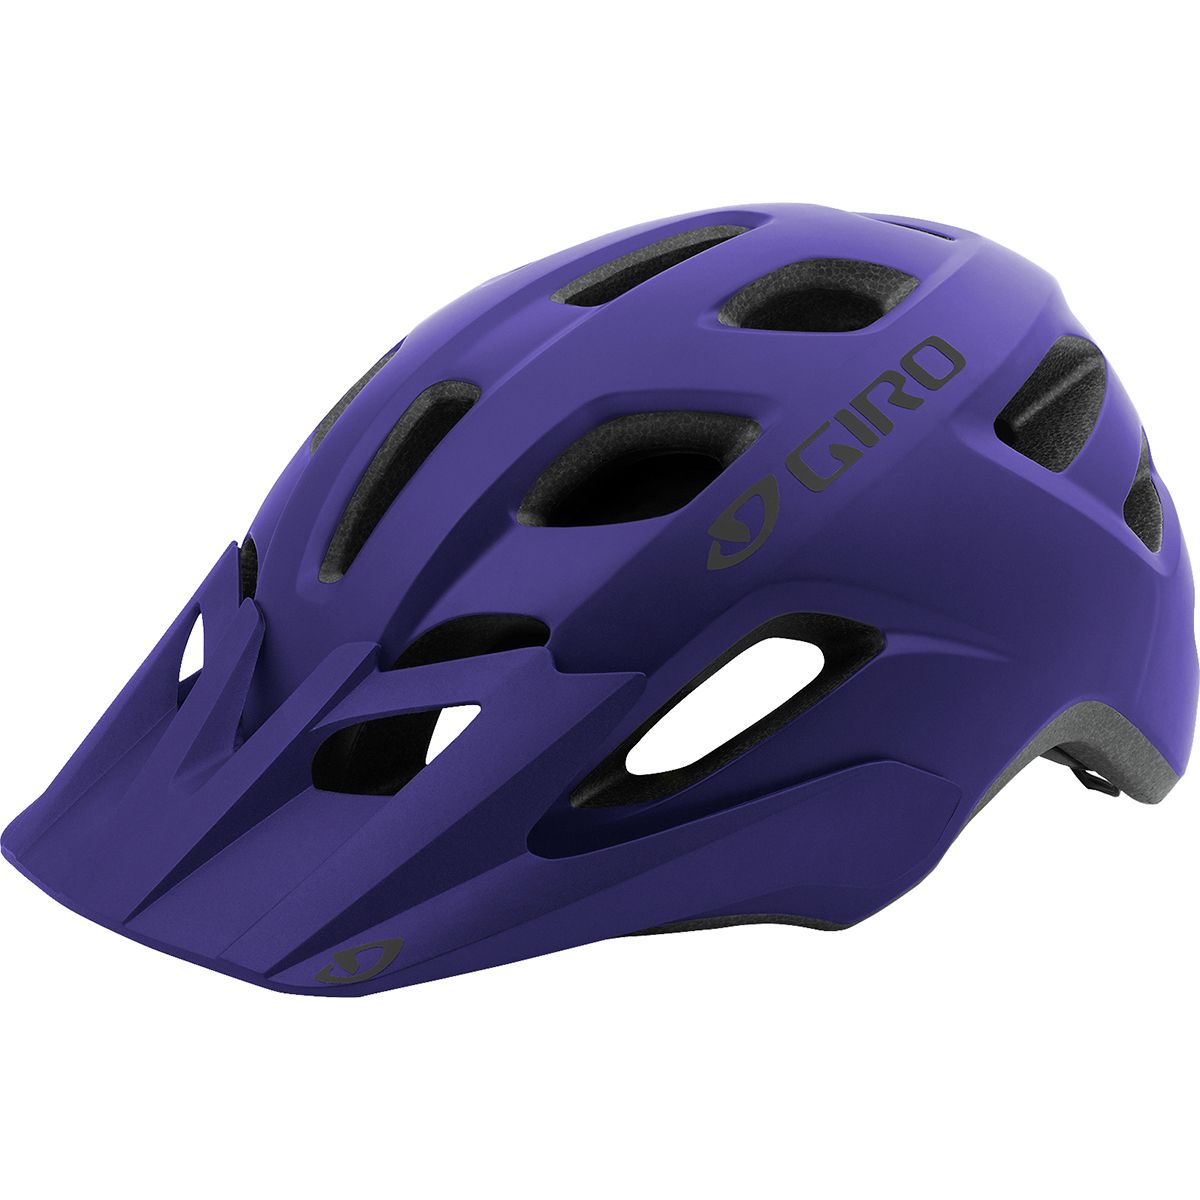 Giro Verce MIPS Helmet - Women's